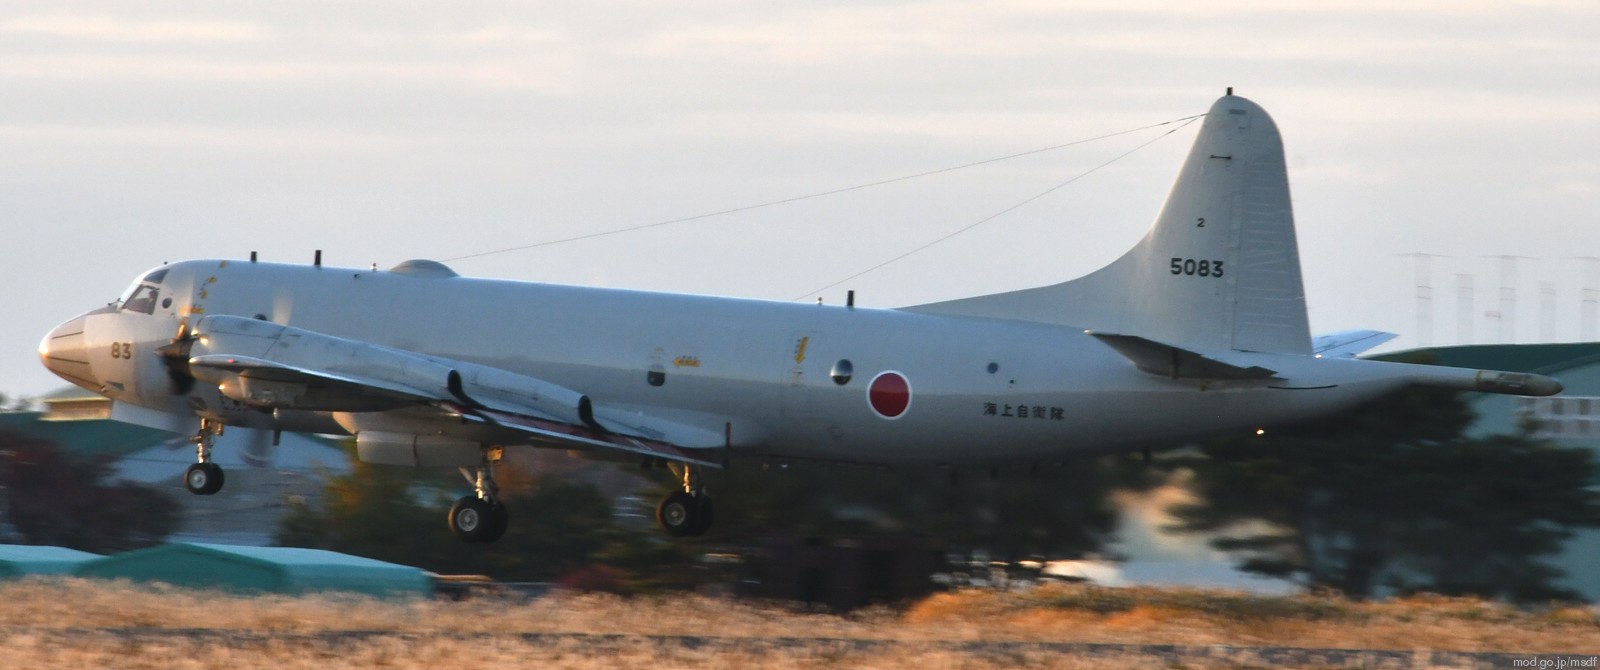 kawasaki p-3c orion patrol aircraft mpa japan maritime self defense force jmsdf 5083 04